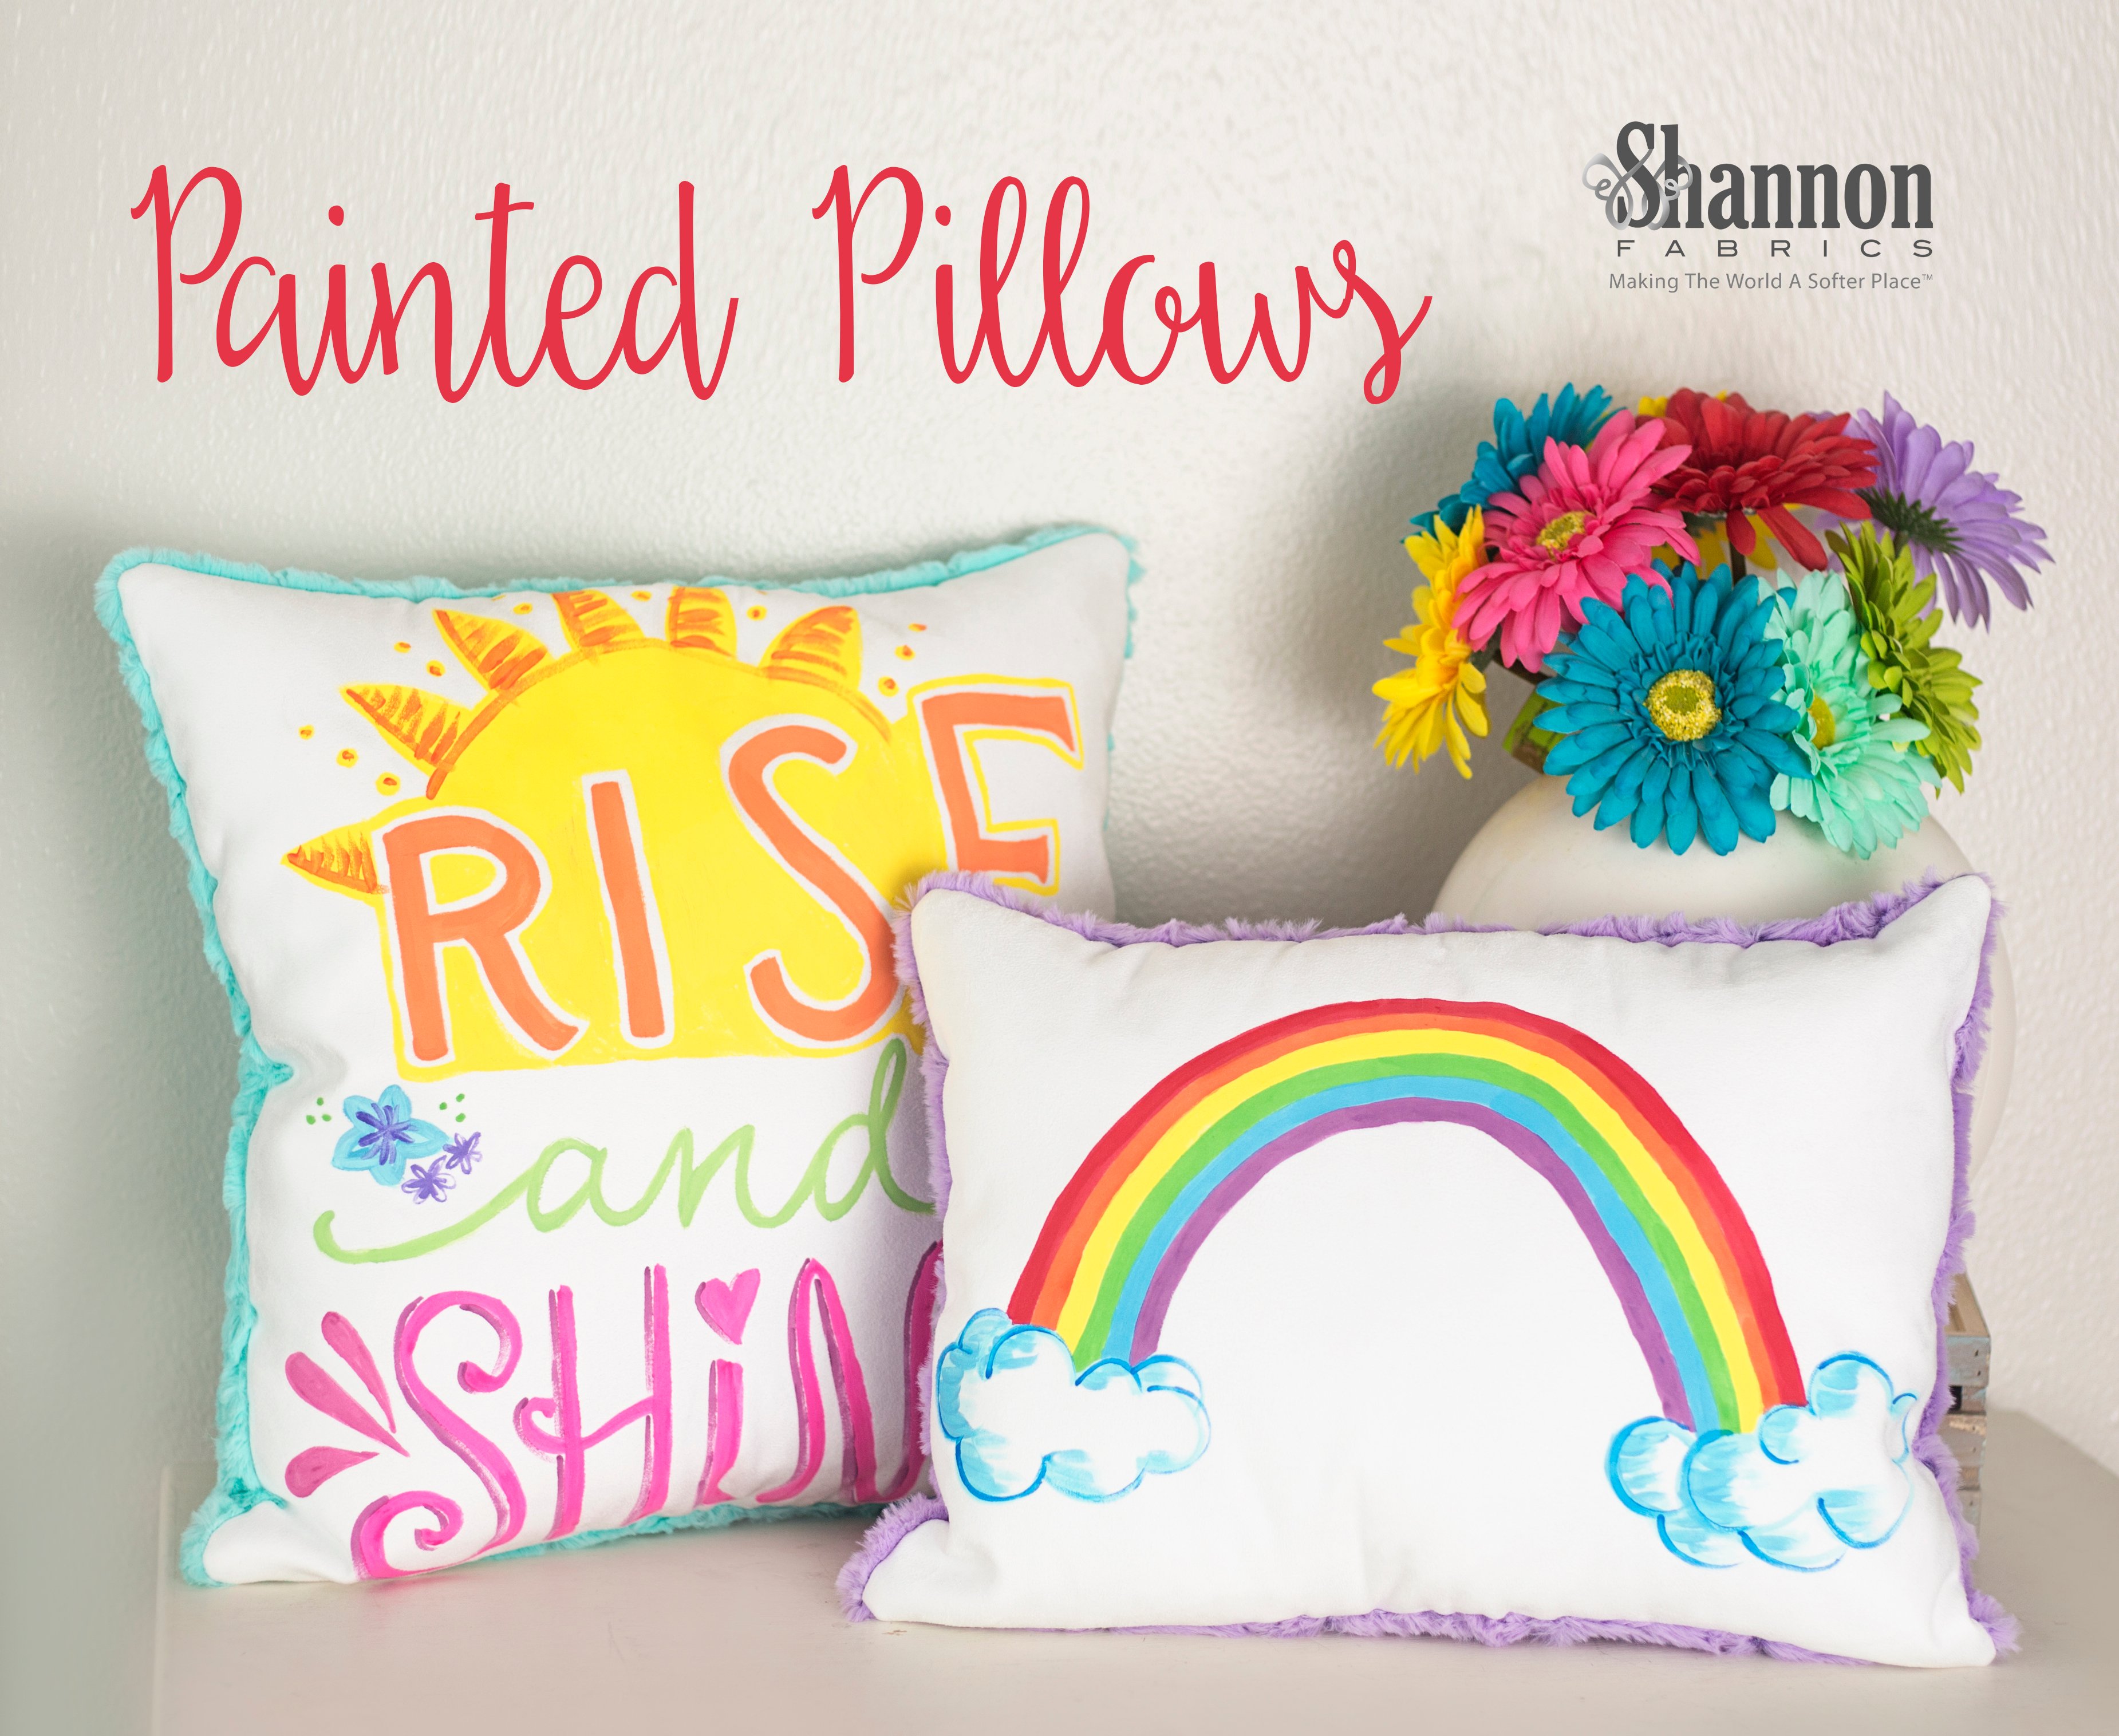 https://blog.shannonfabrics.com/hs-fs/hubfs/Imported_Blog_Media/Painted-Pillows-for-Spring-2.jpg?width=3701&height=3032&name=Painted-Pillows-for-Spring-2.jpg